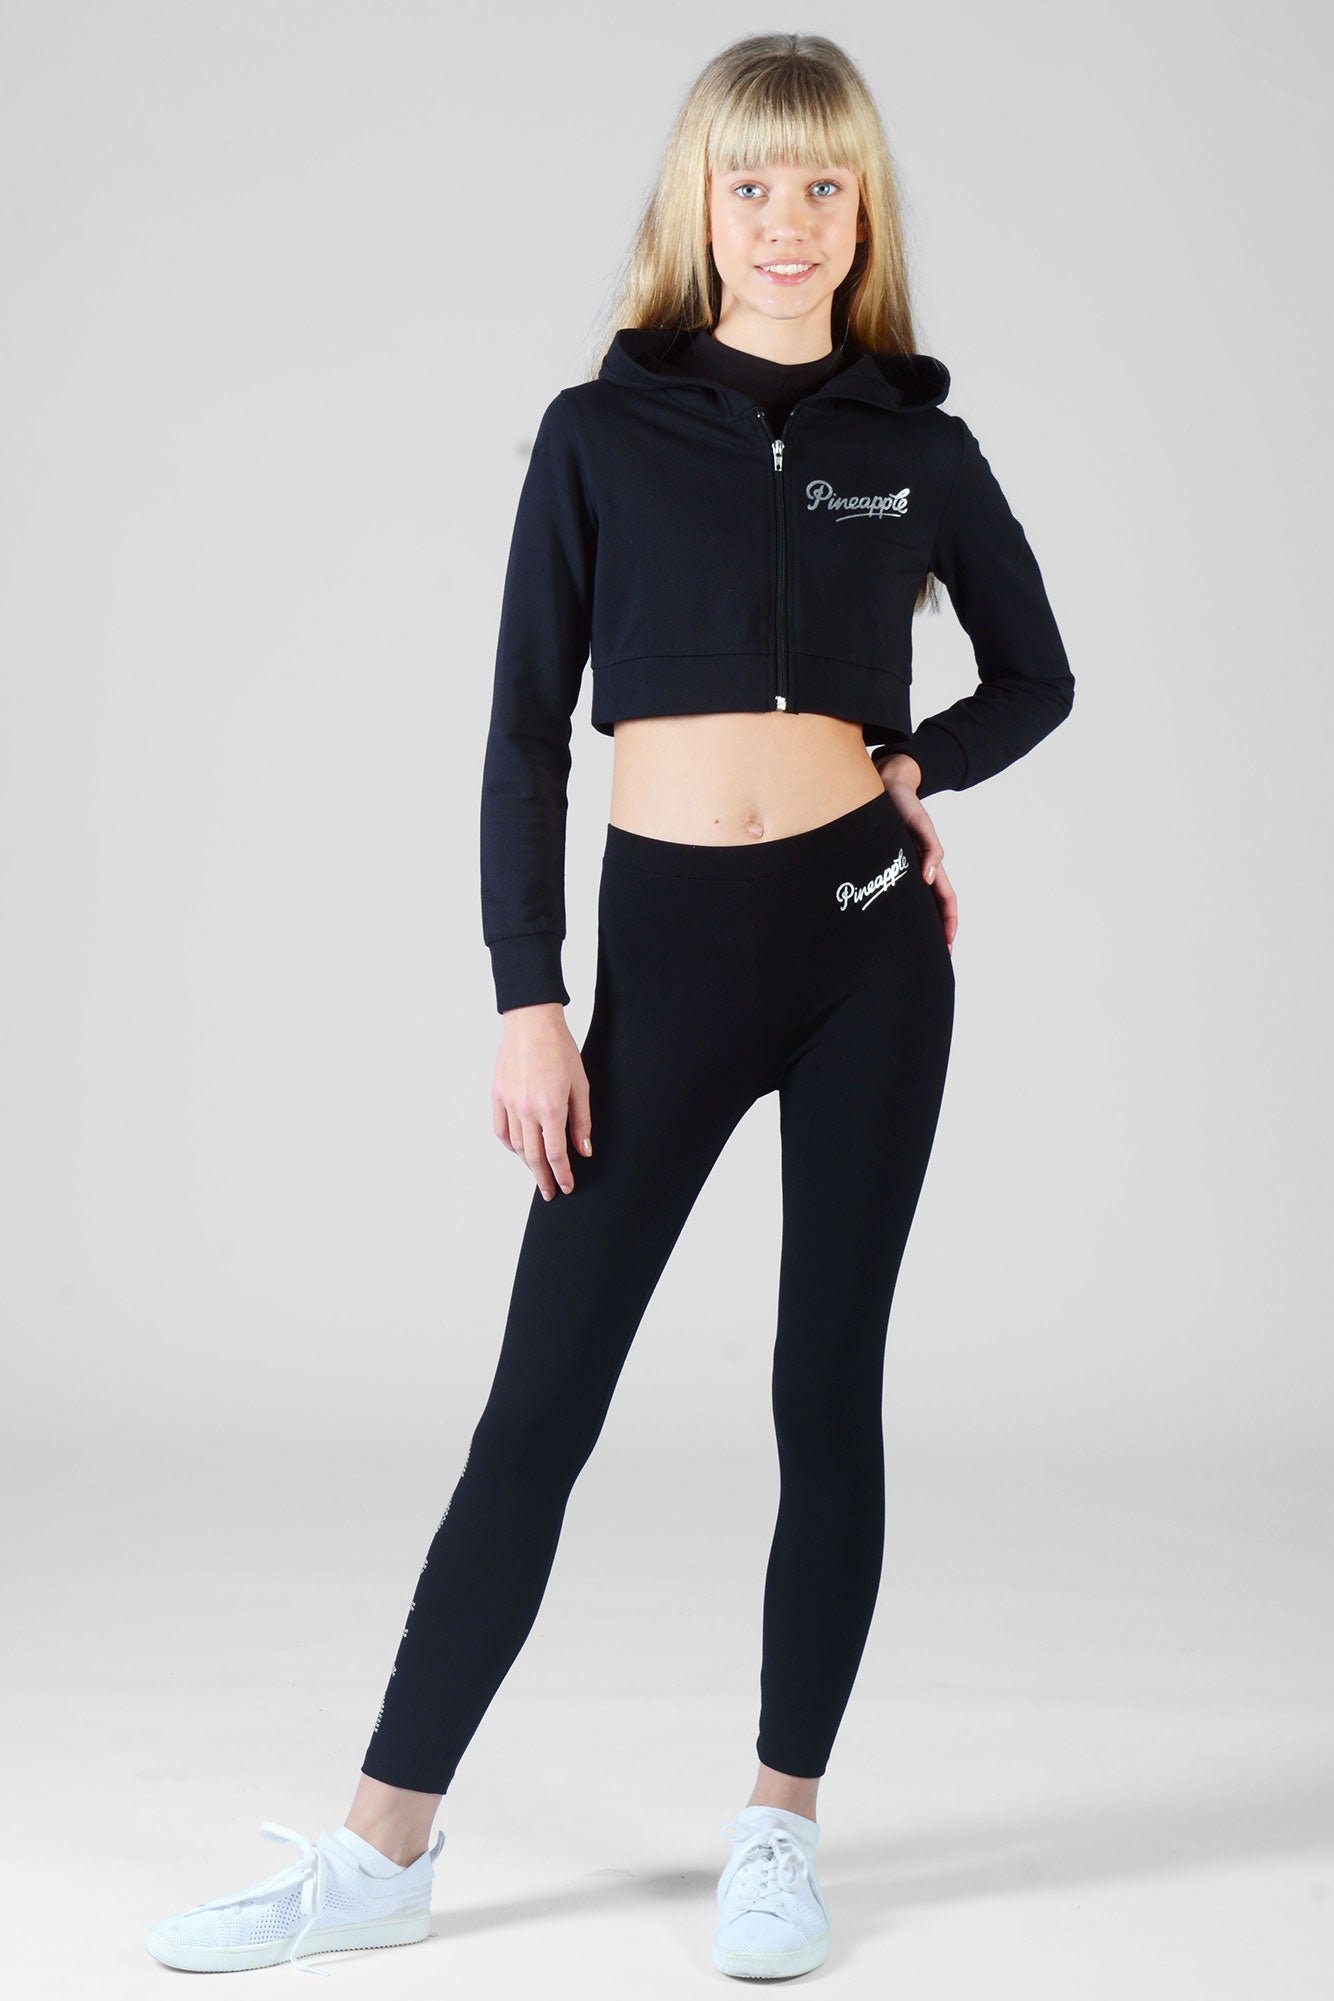 Scuba Active Women's Sports Cropped Capri Leggings Gym Workout Fitness  Black | eBay